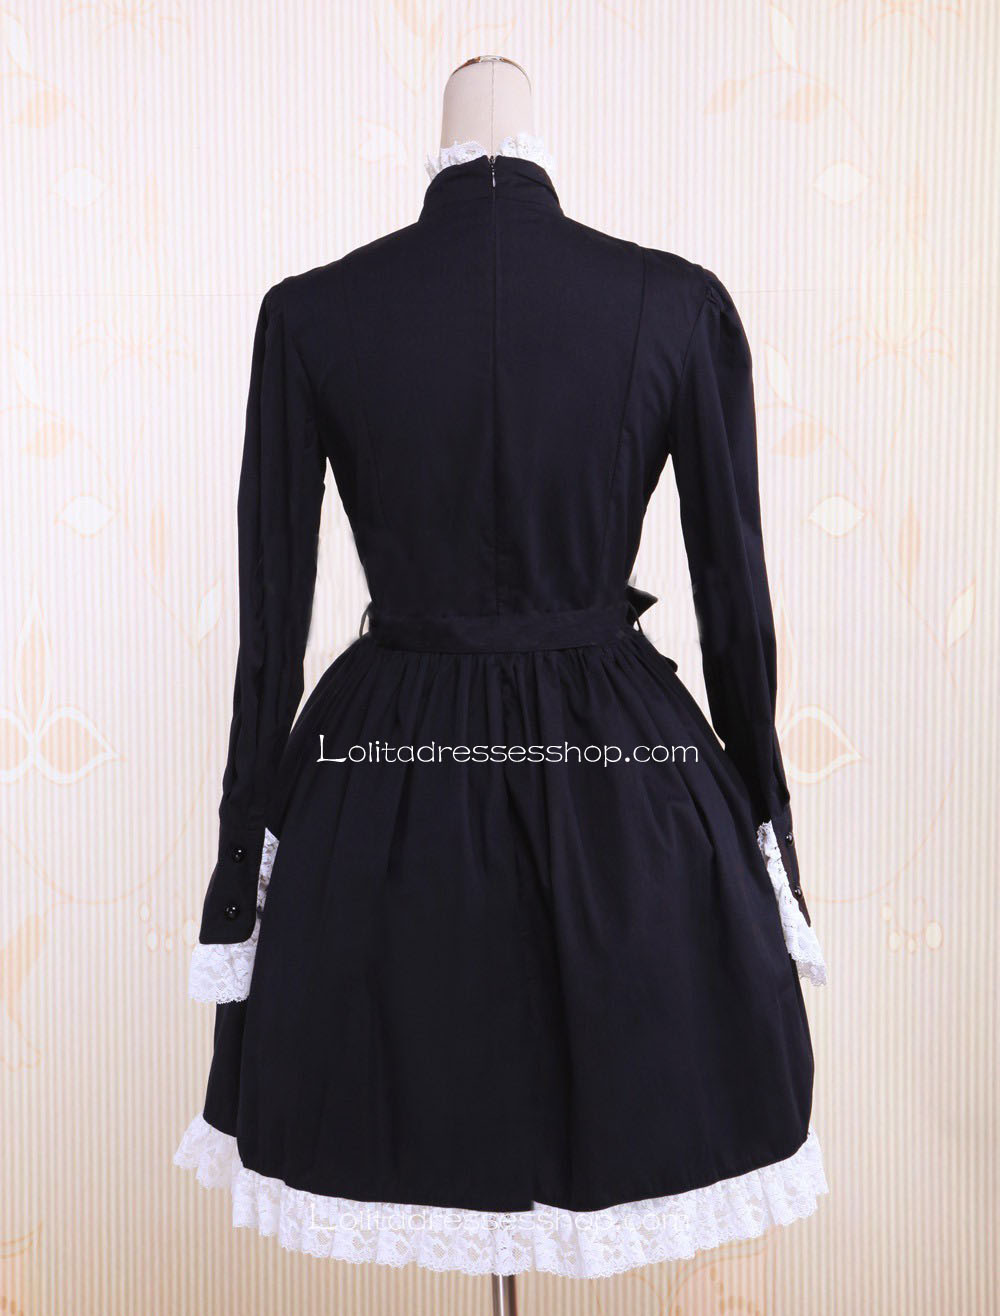 Sweet Princess Black White Bow Lace High Collar Punk Lolita Dress